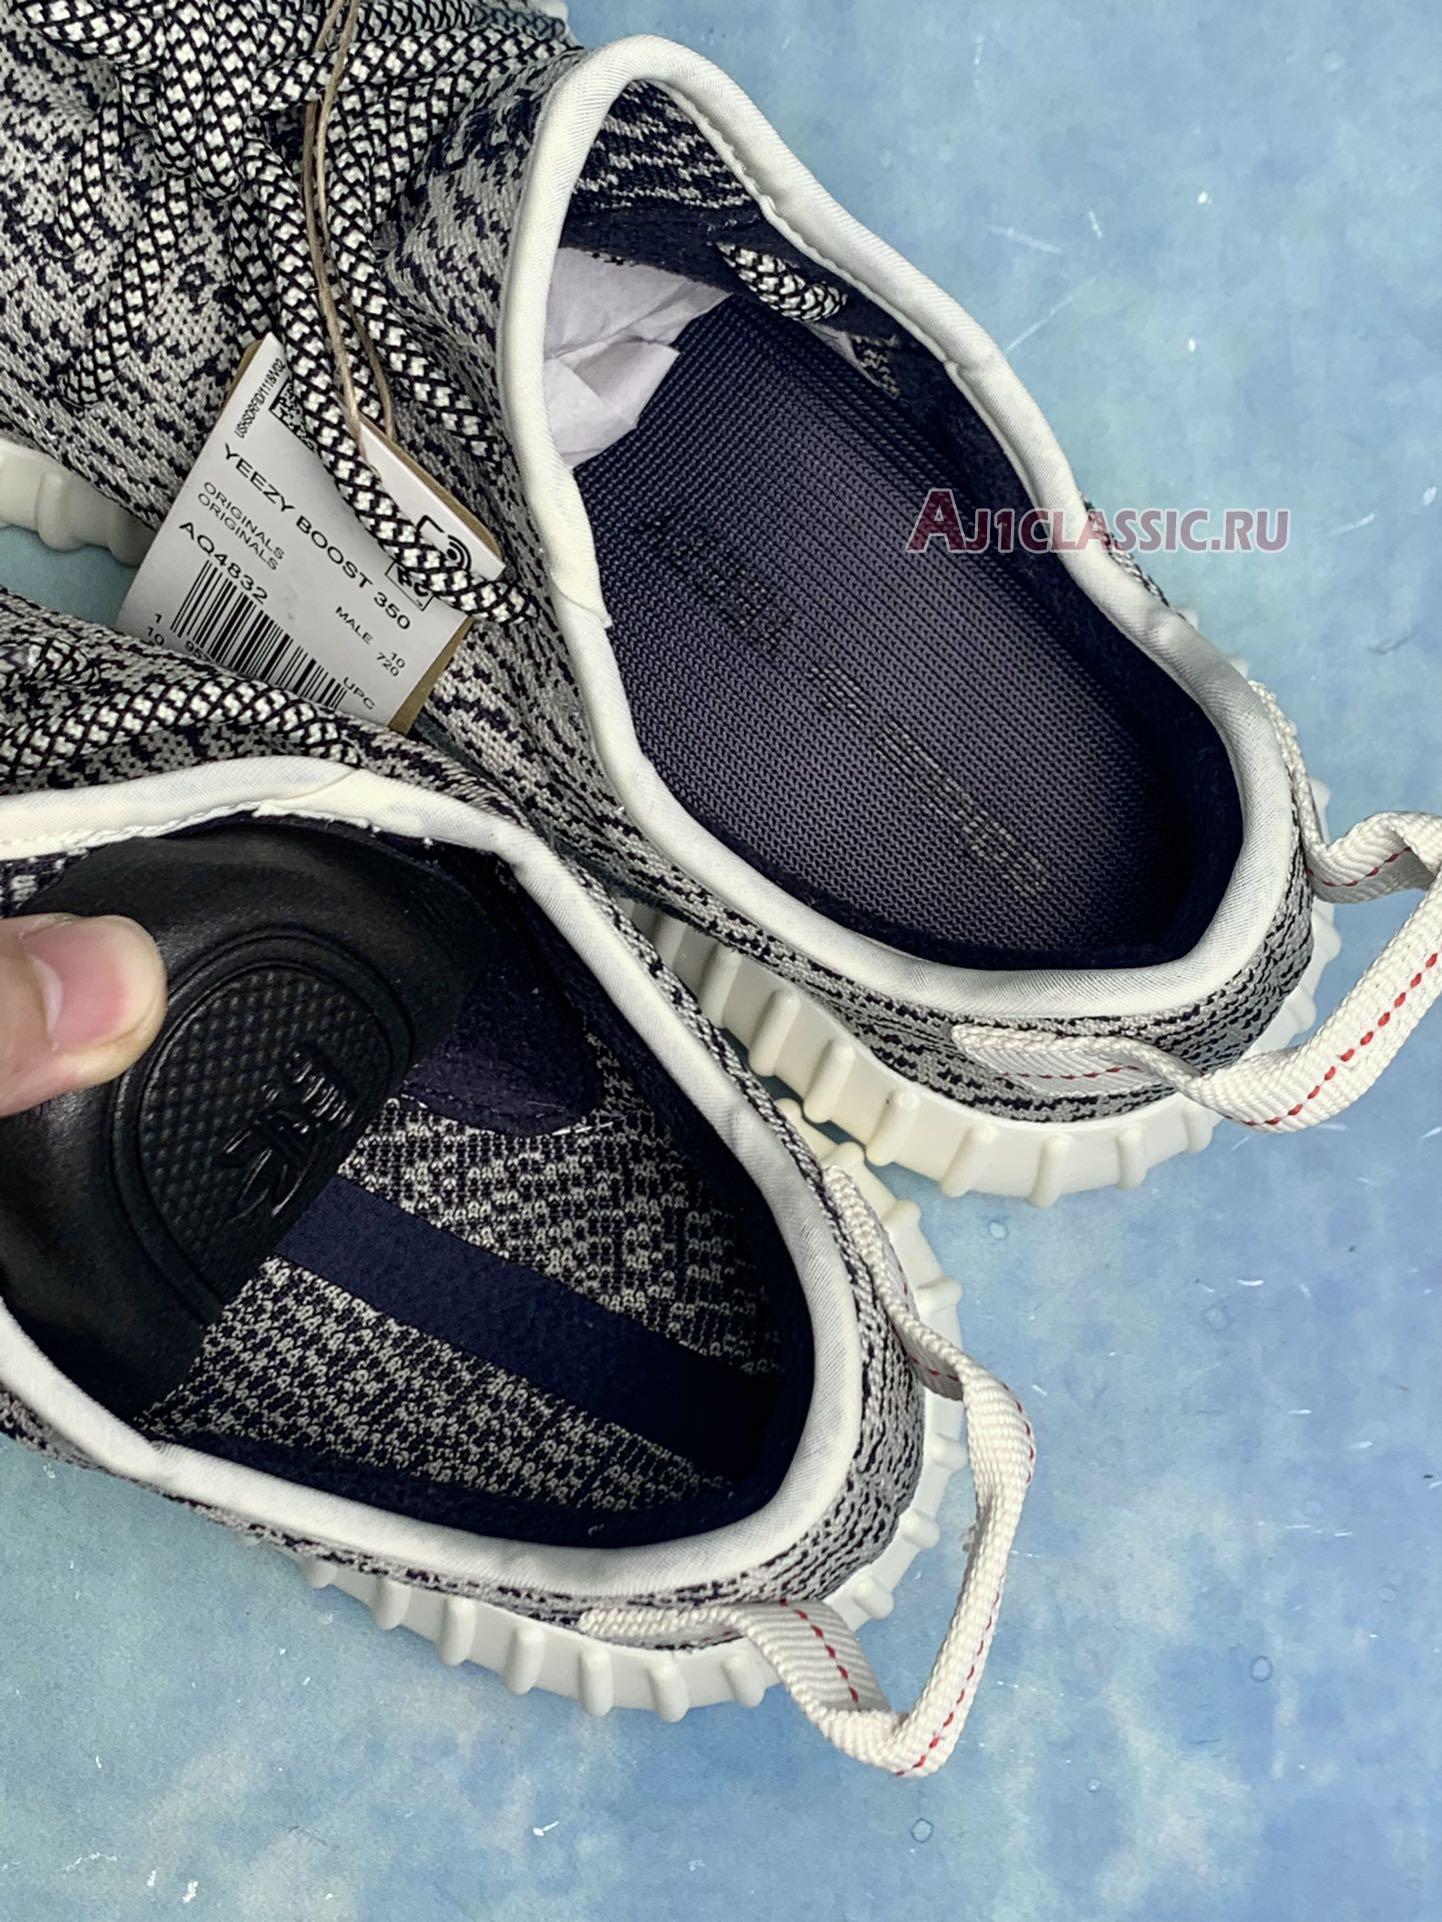 Adidas Yeezy Boost 350 "Turtle Dove" AQ4832-2